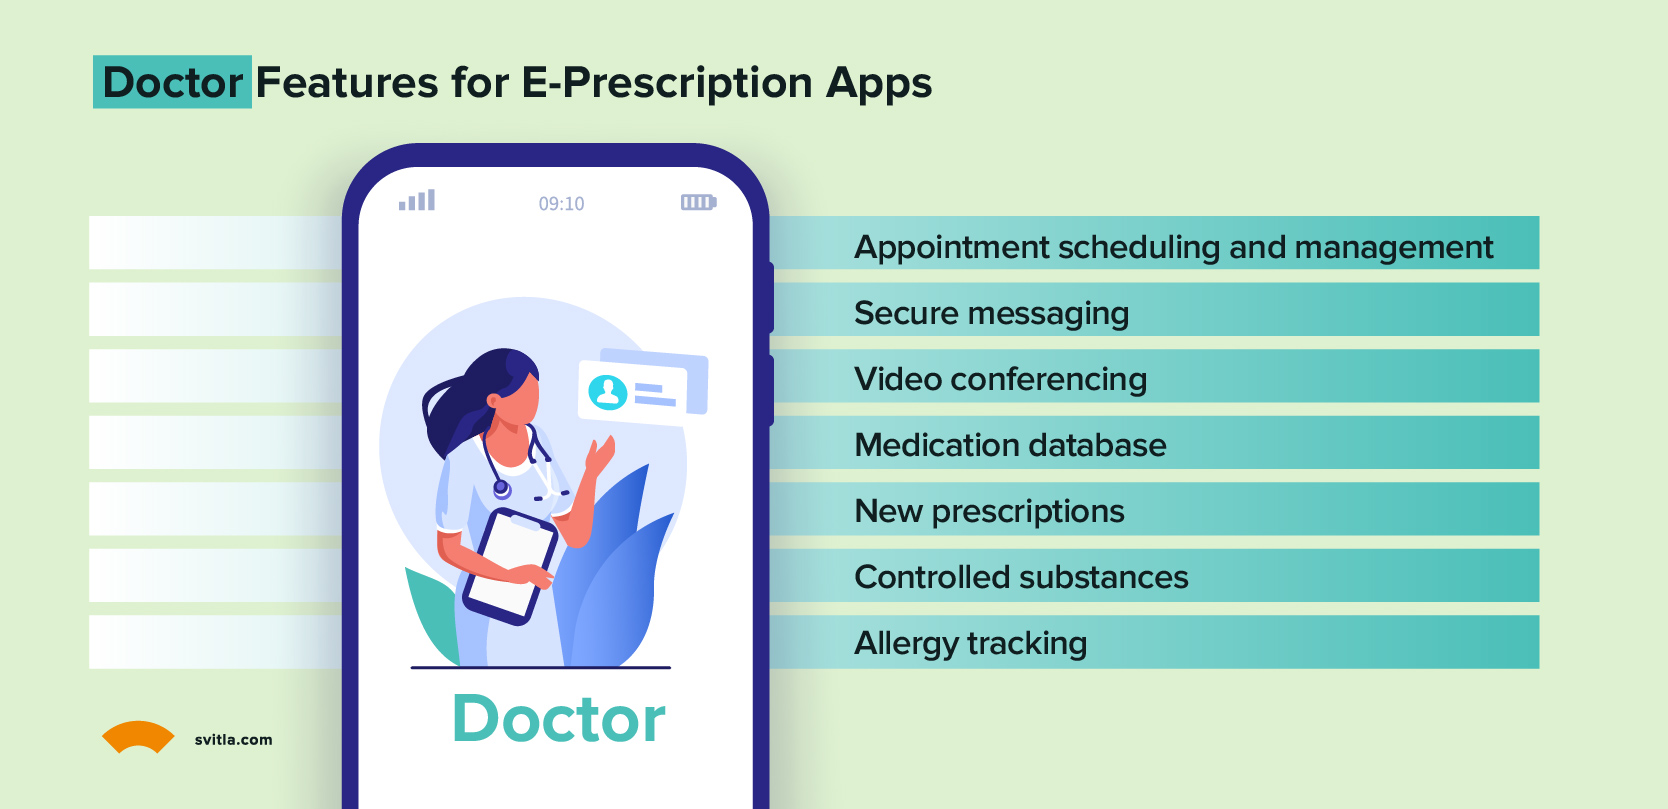 Doctor features for e-prescription apps